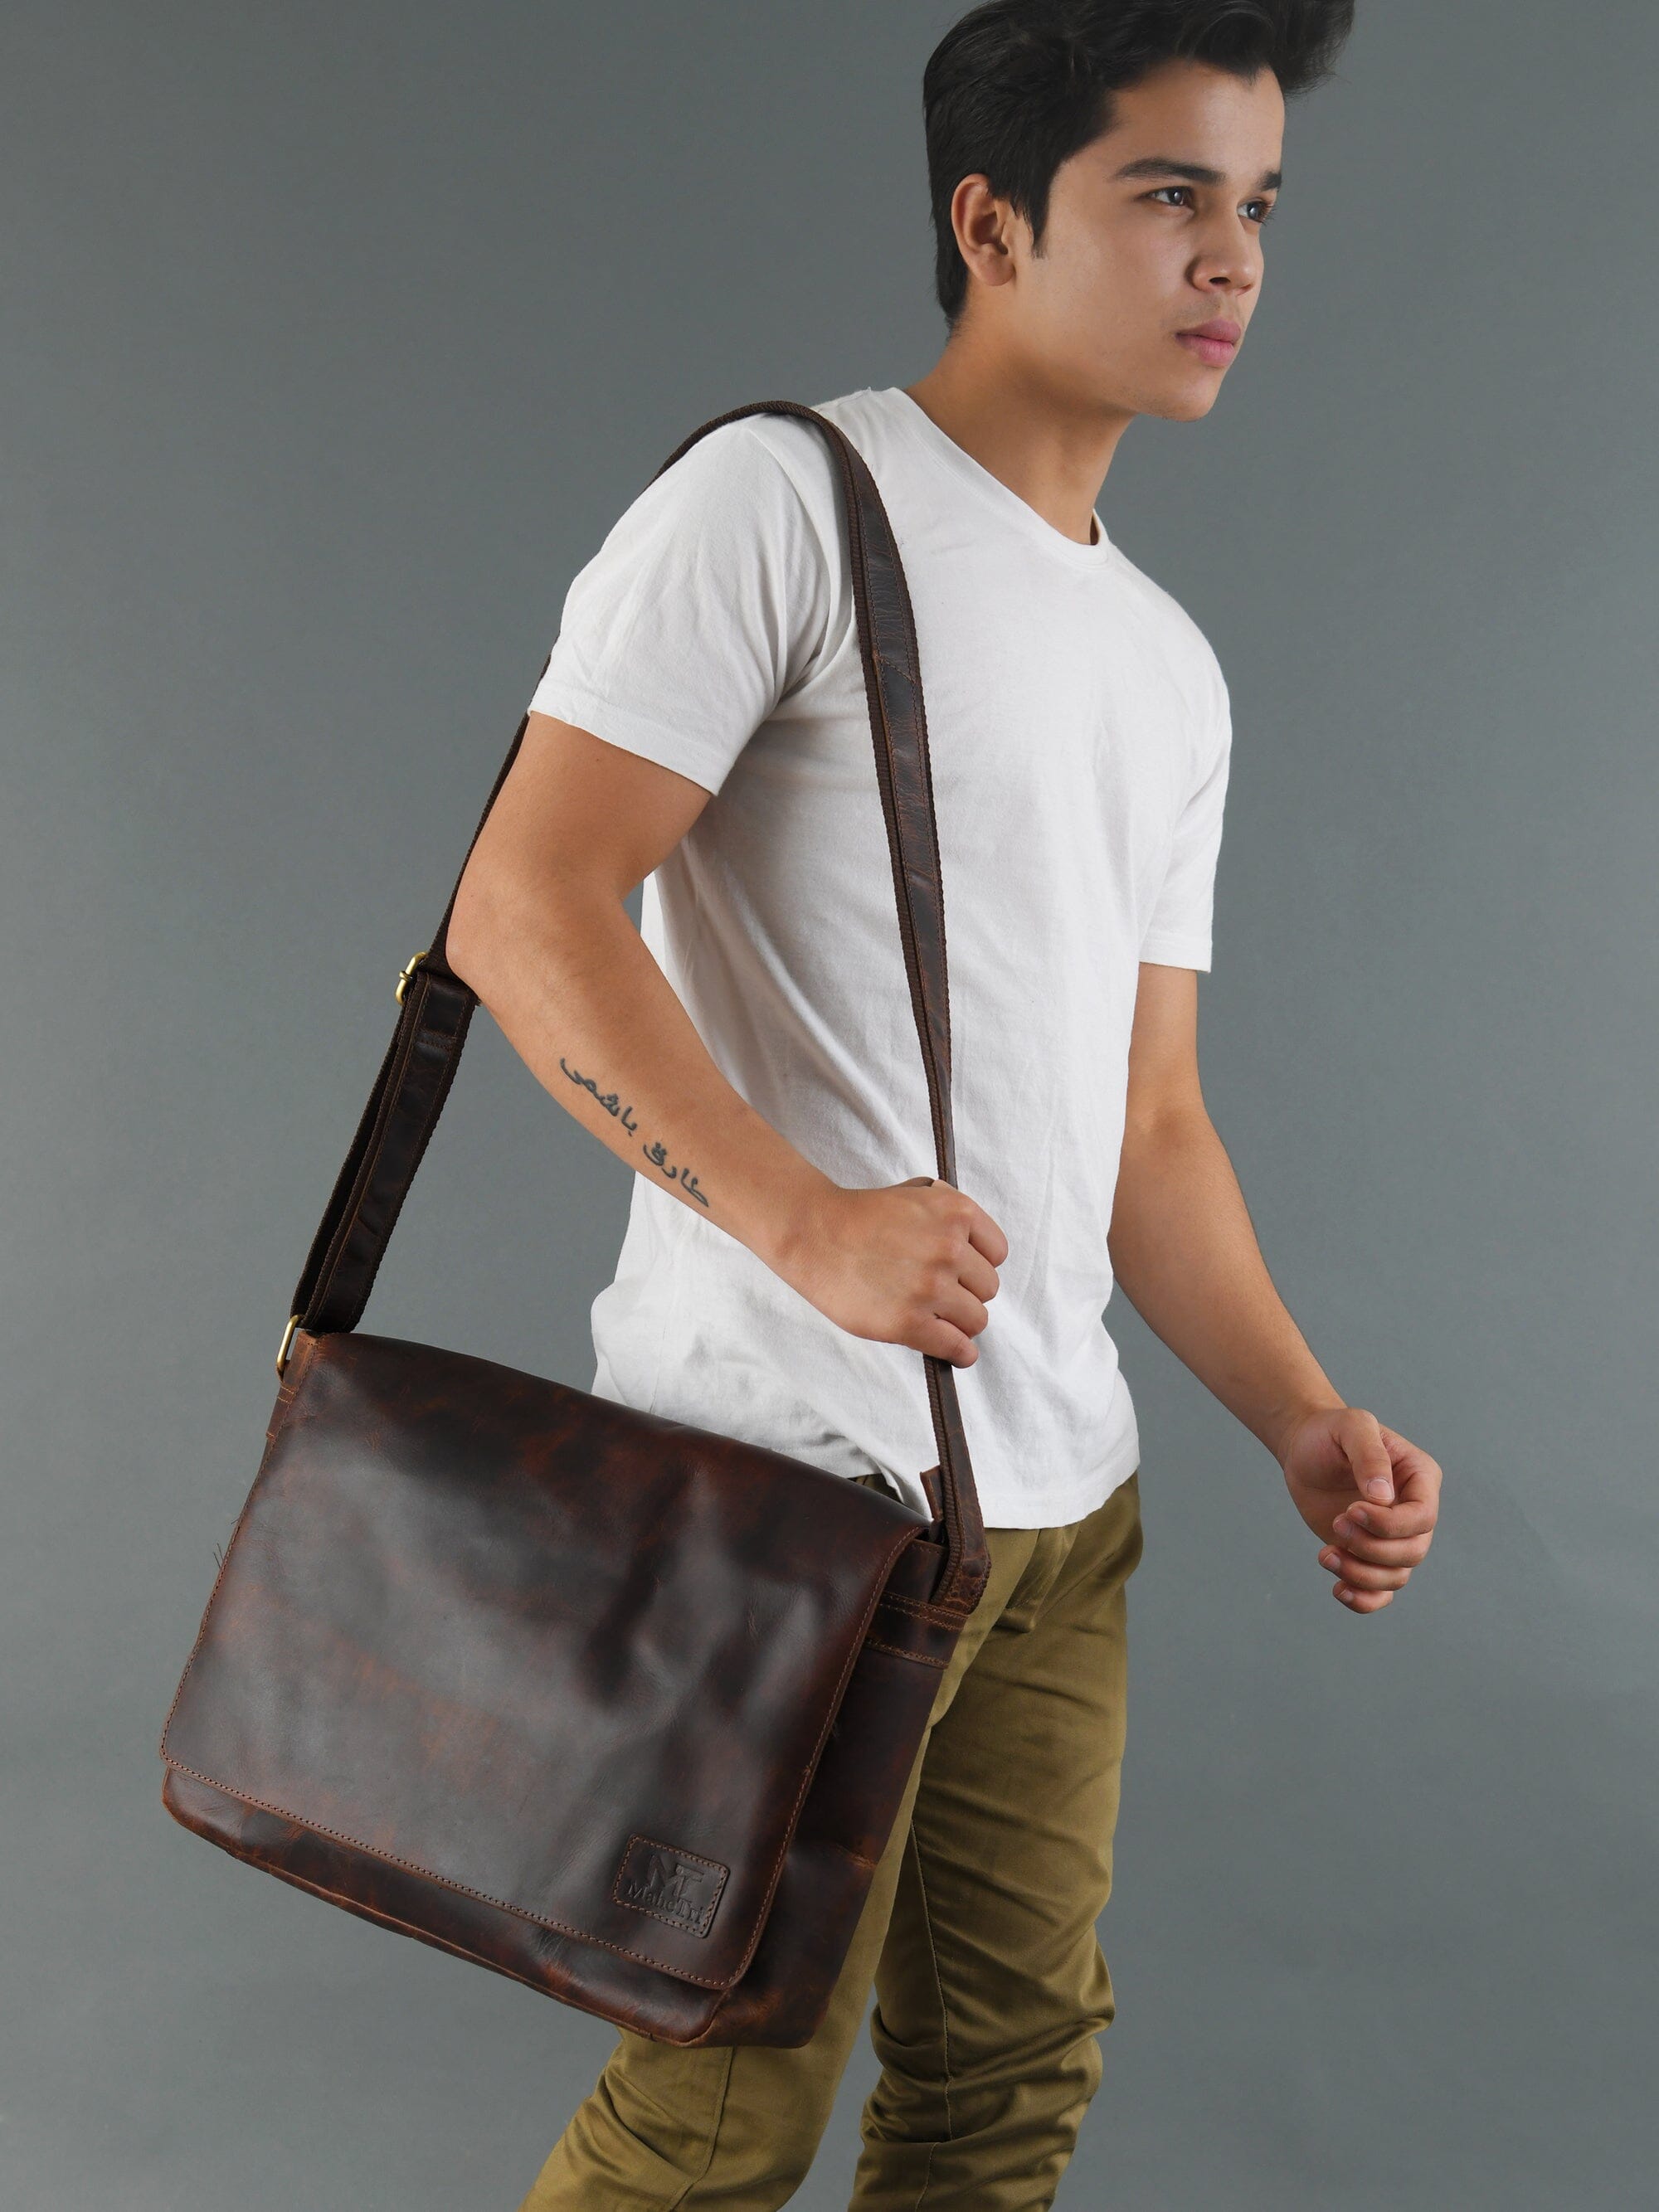 Kayden Leather Messenger Bag | Handmade Leather Messenger Bag — Classy ...